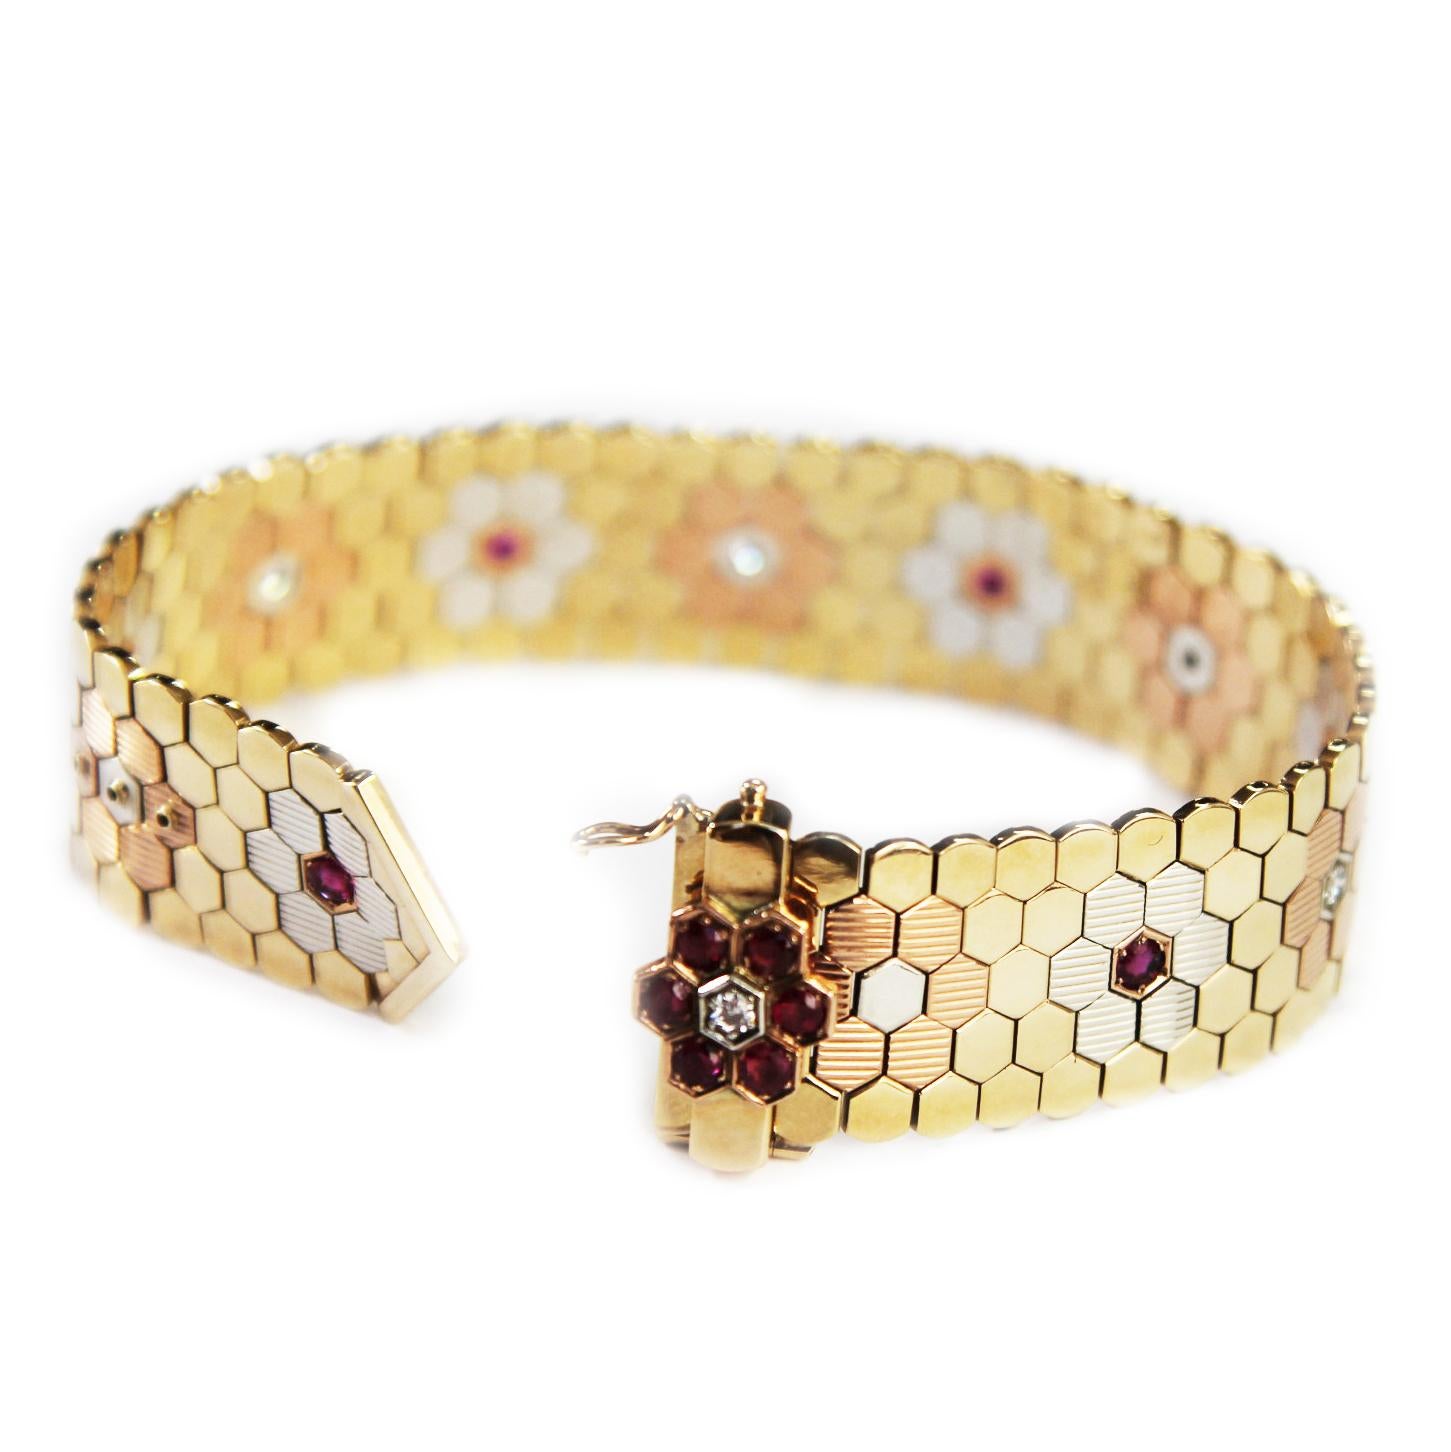 Retro Ruby & Diamond Buckle Bracelet in Yellow, White Rose Gold, 9K, British Vintage